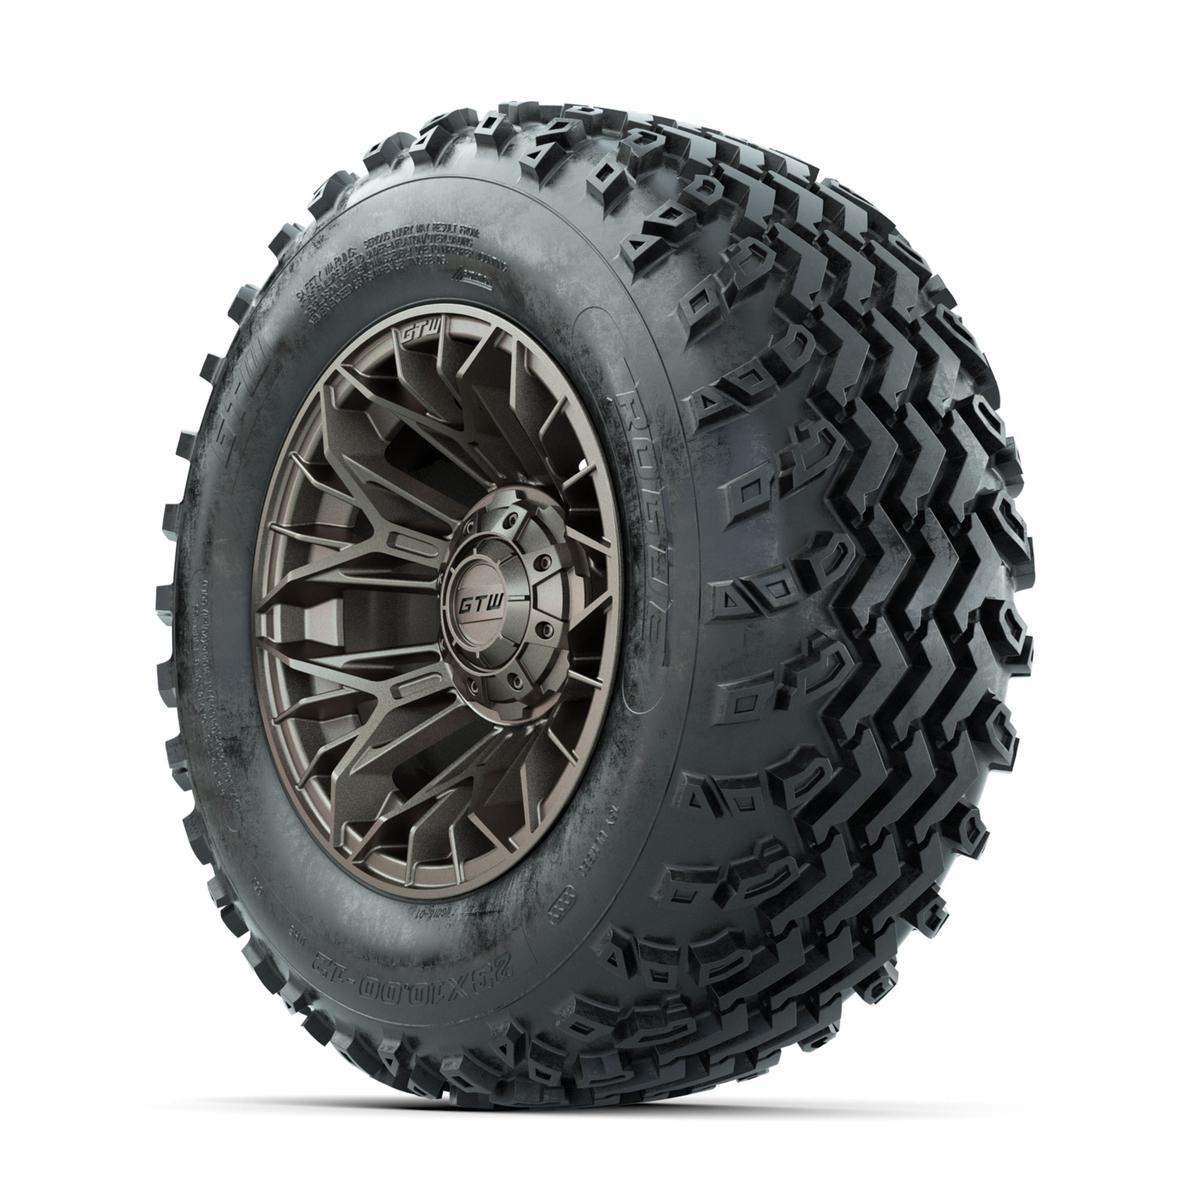 GTW Stellar Matte Bronze 12 in Wheels with 23x10.00-12 Rogue All Terrain Tires – Full Set